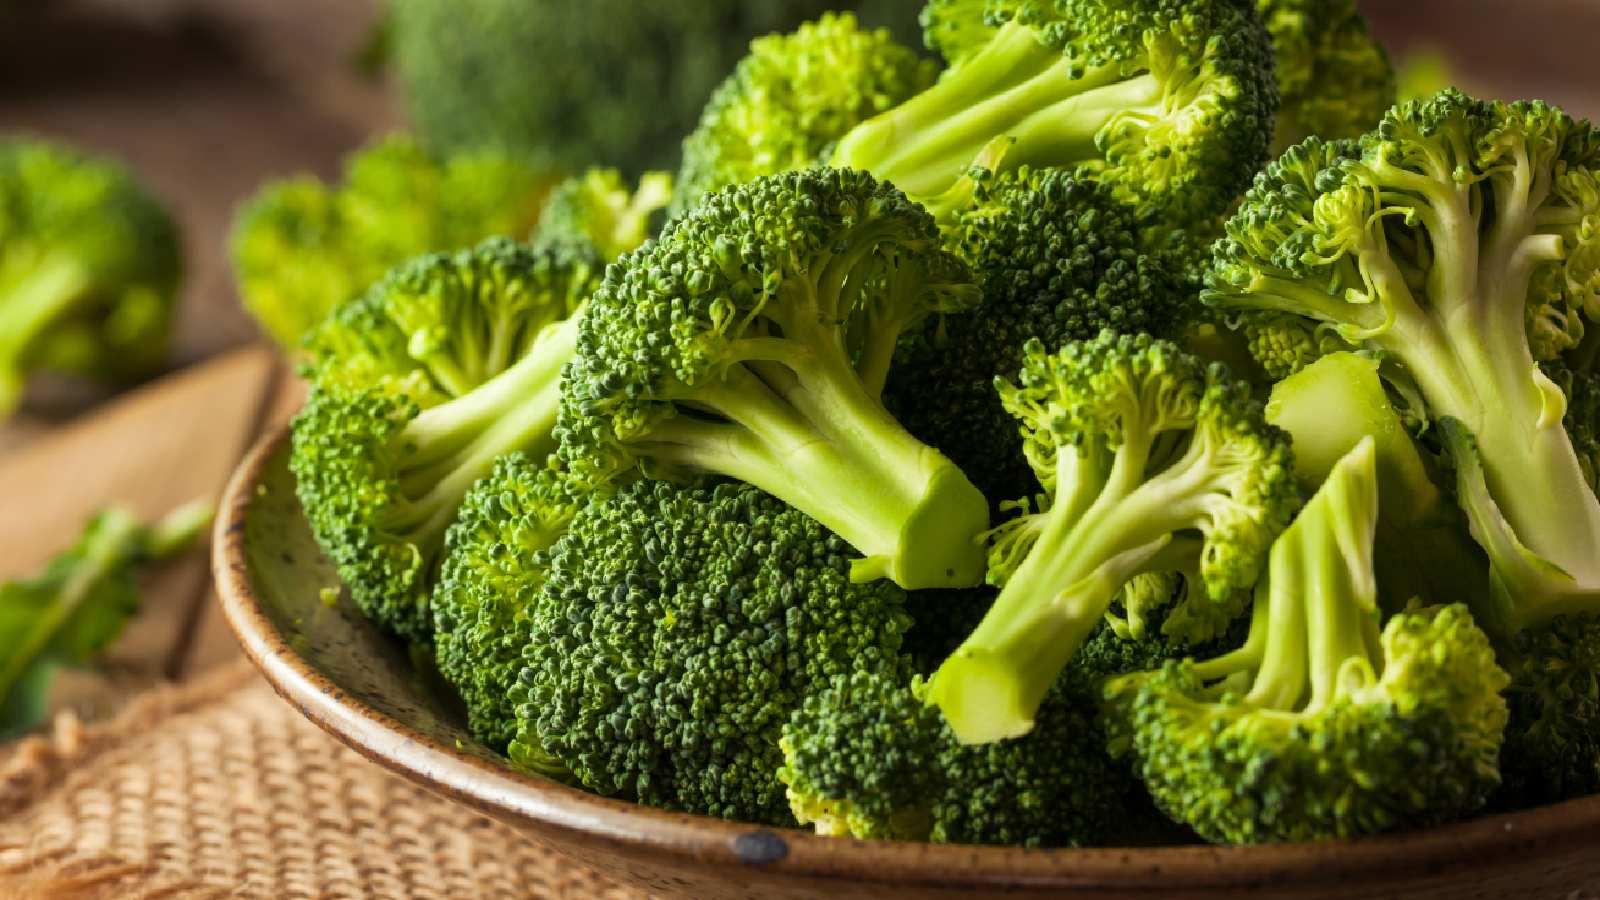 7 healthy ways to eat broccoli